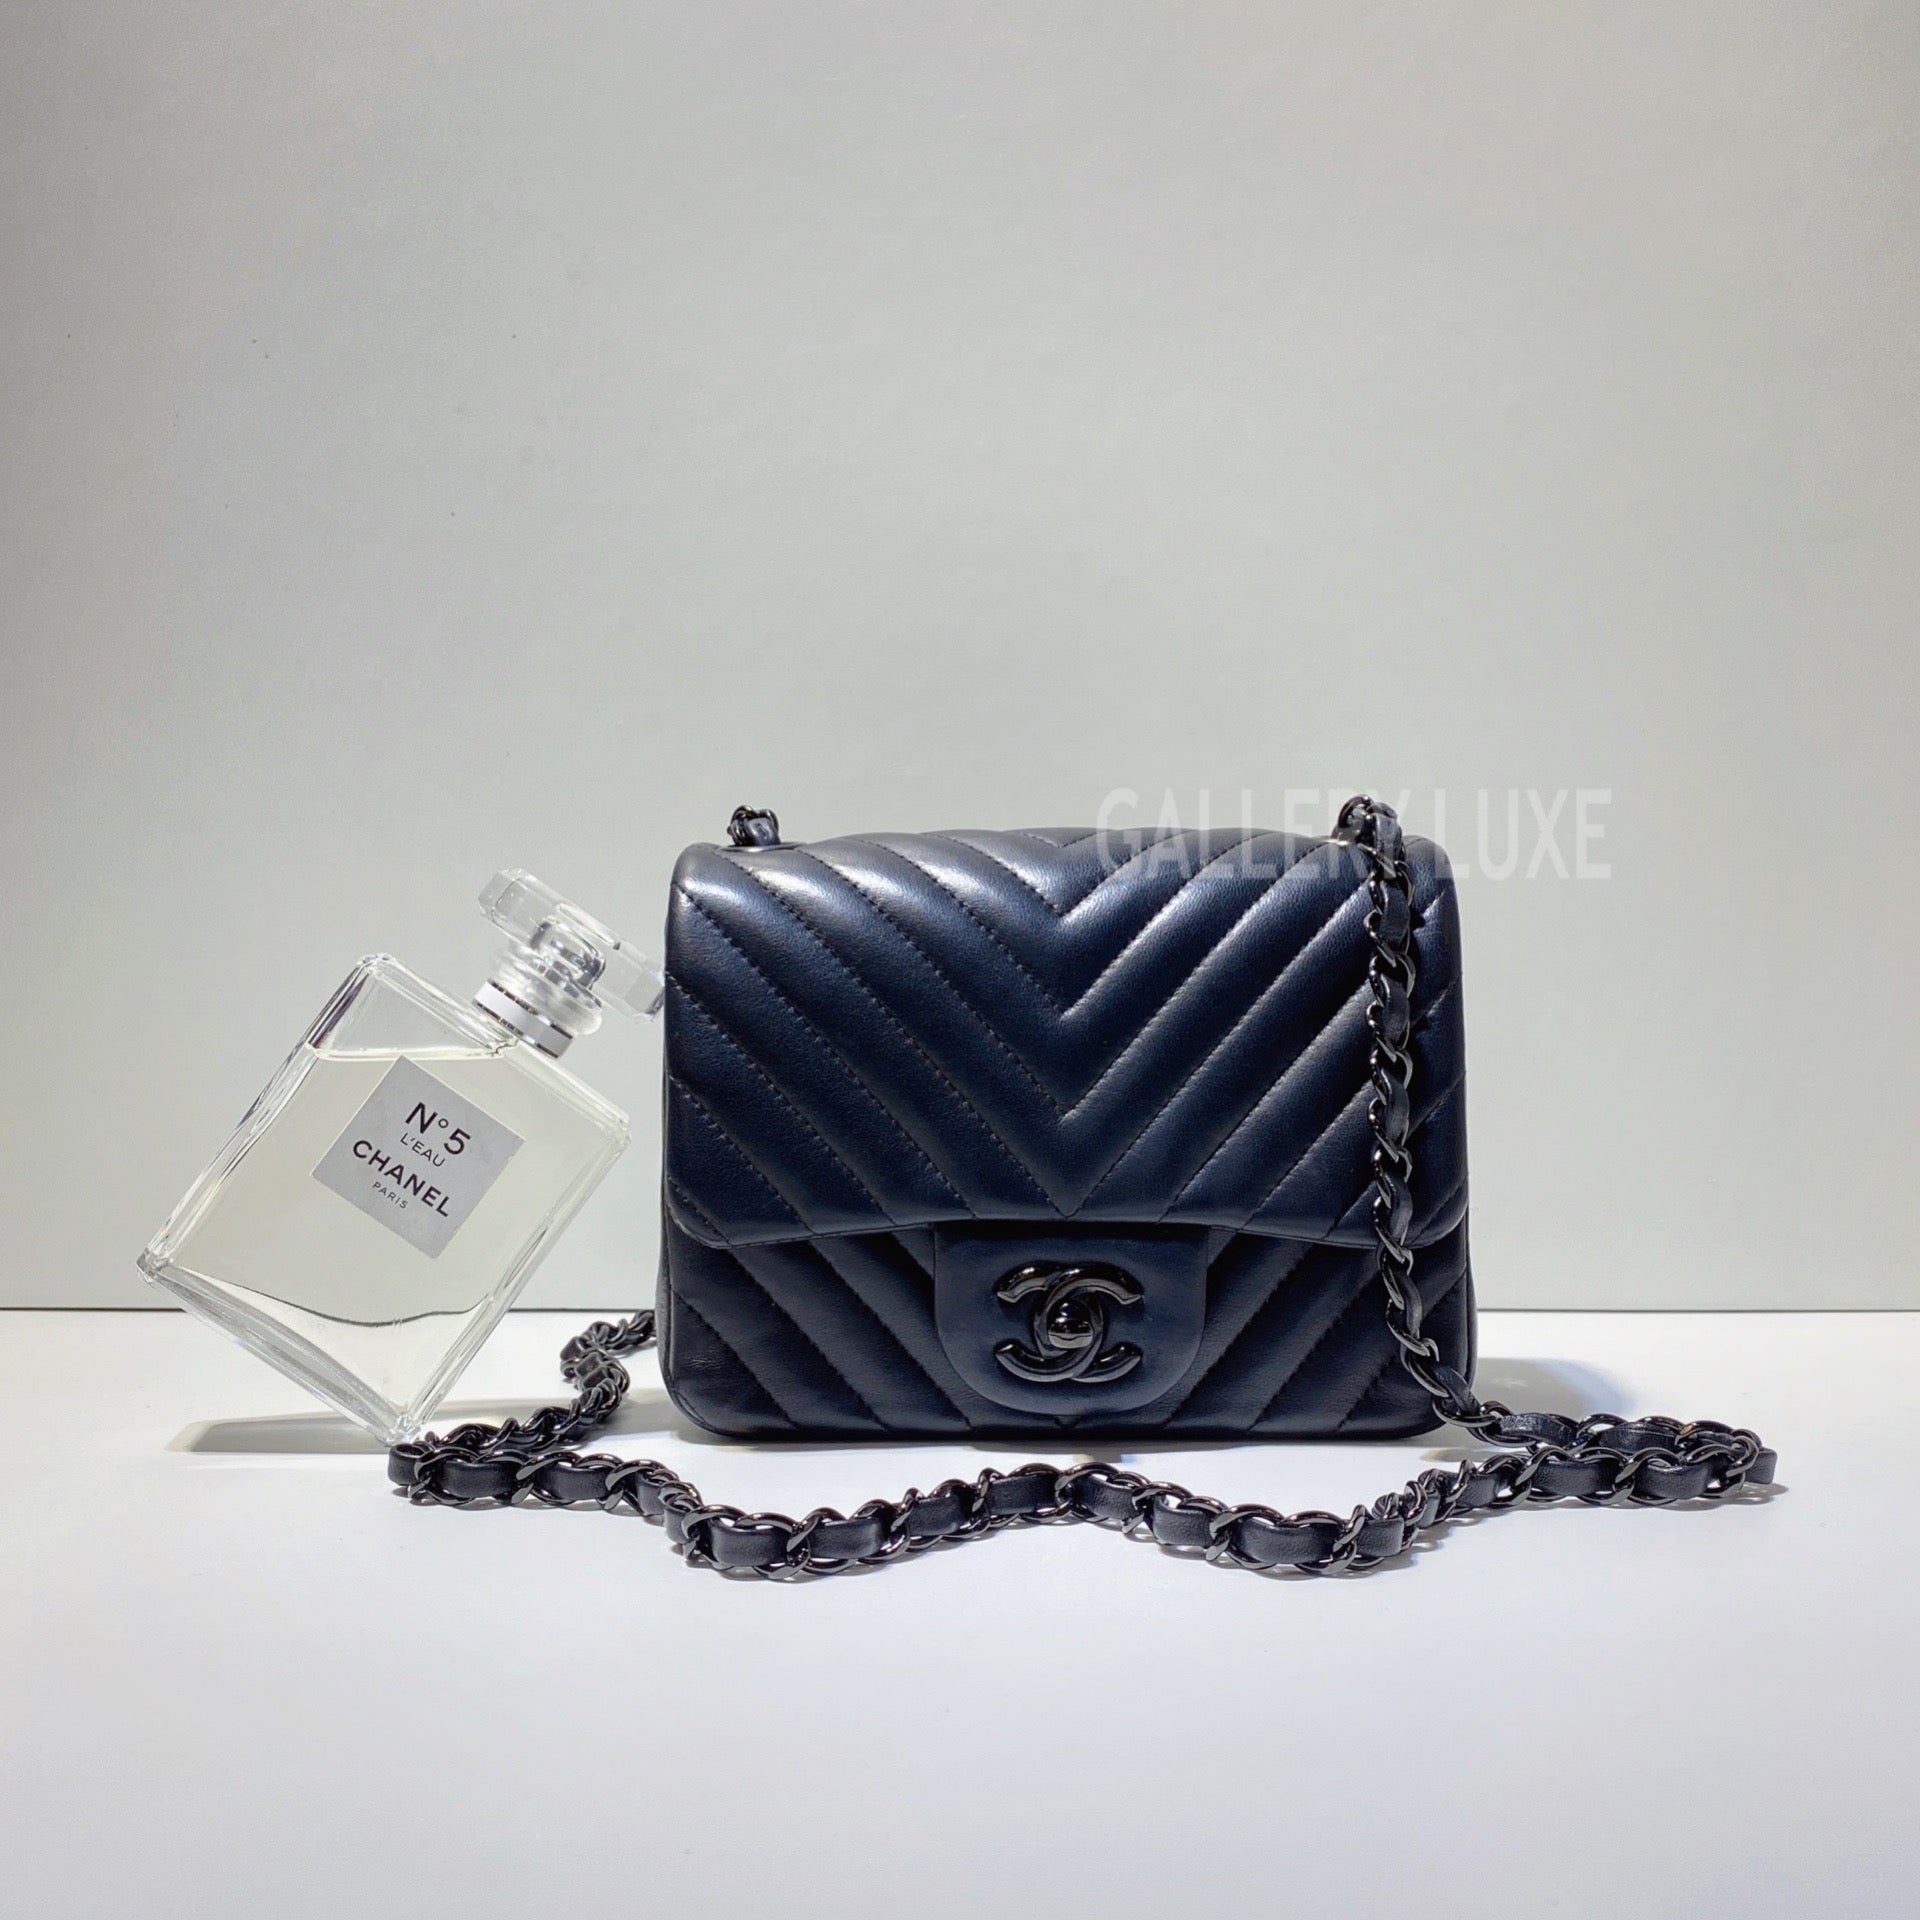 Chanel So Black Chevron Quilted Lambskin Mini Rectangular Classic Flap